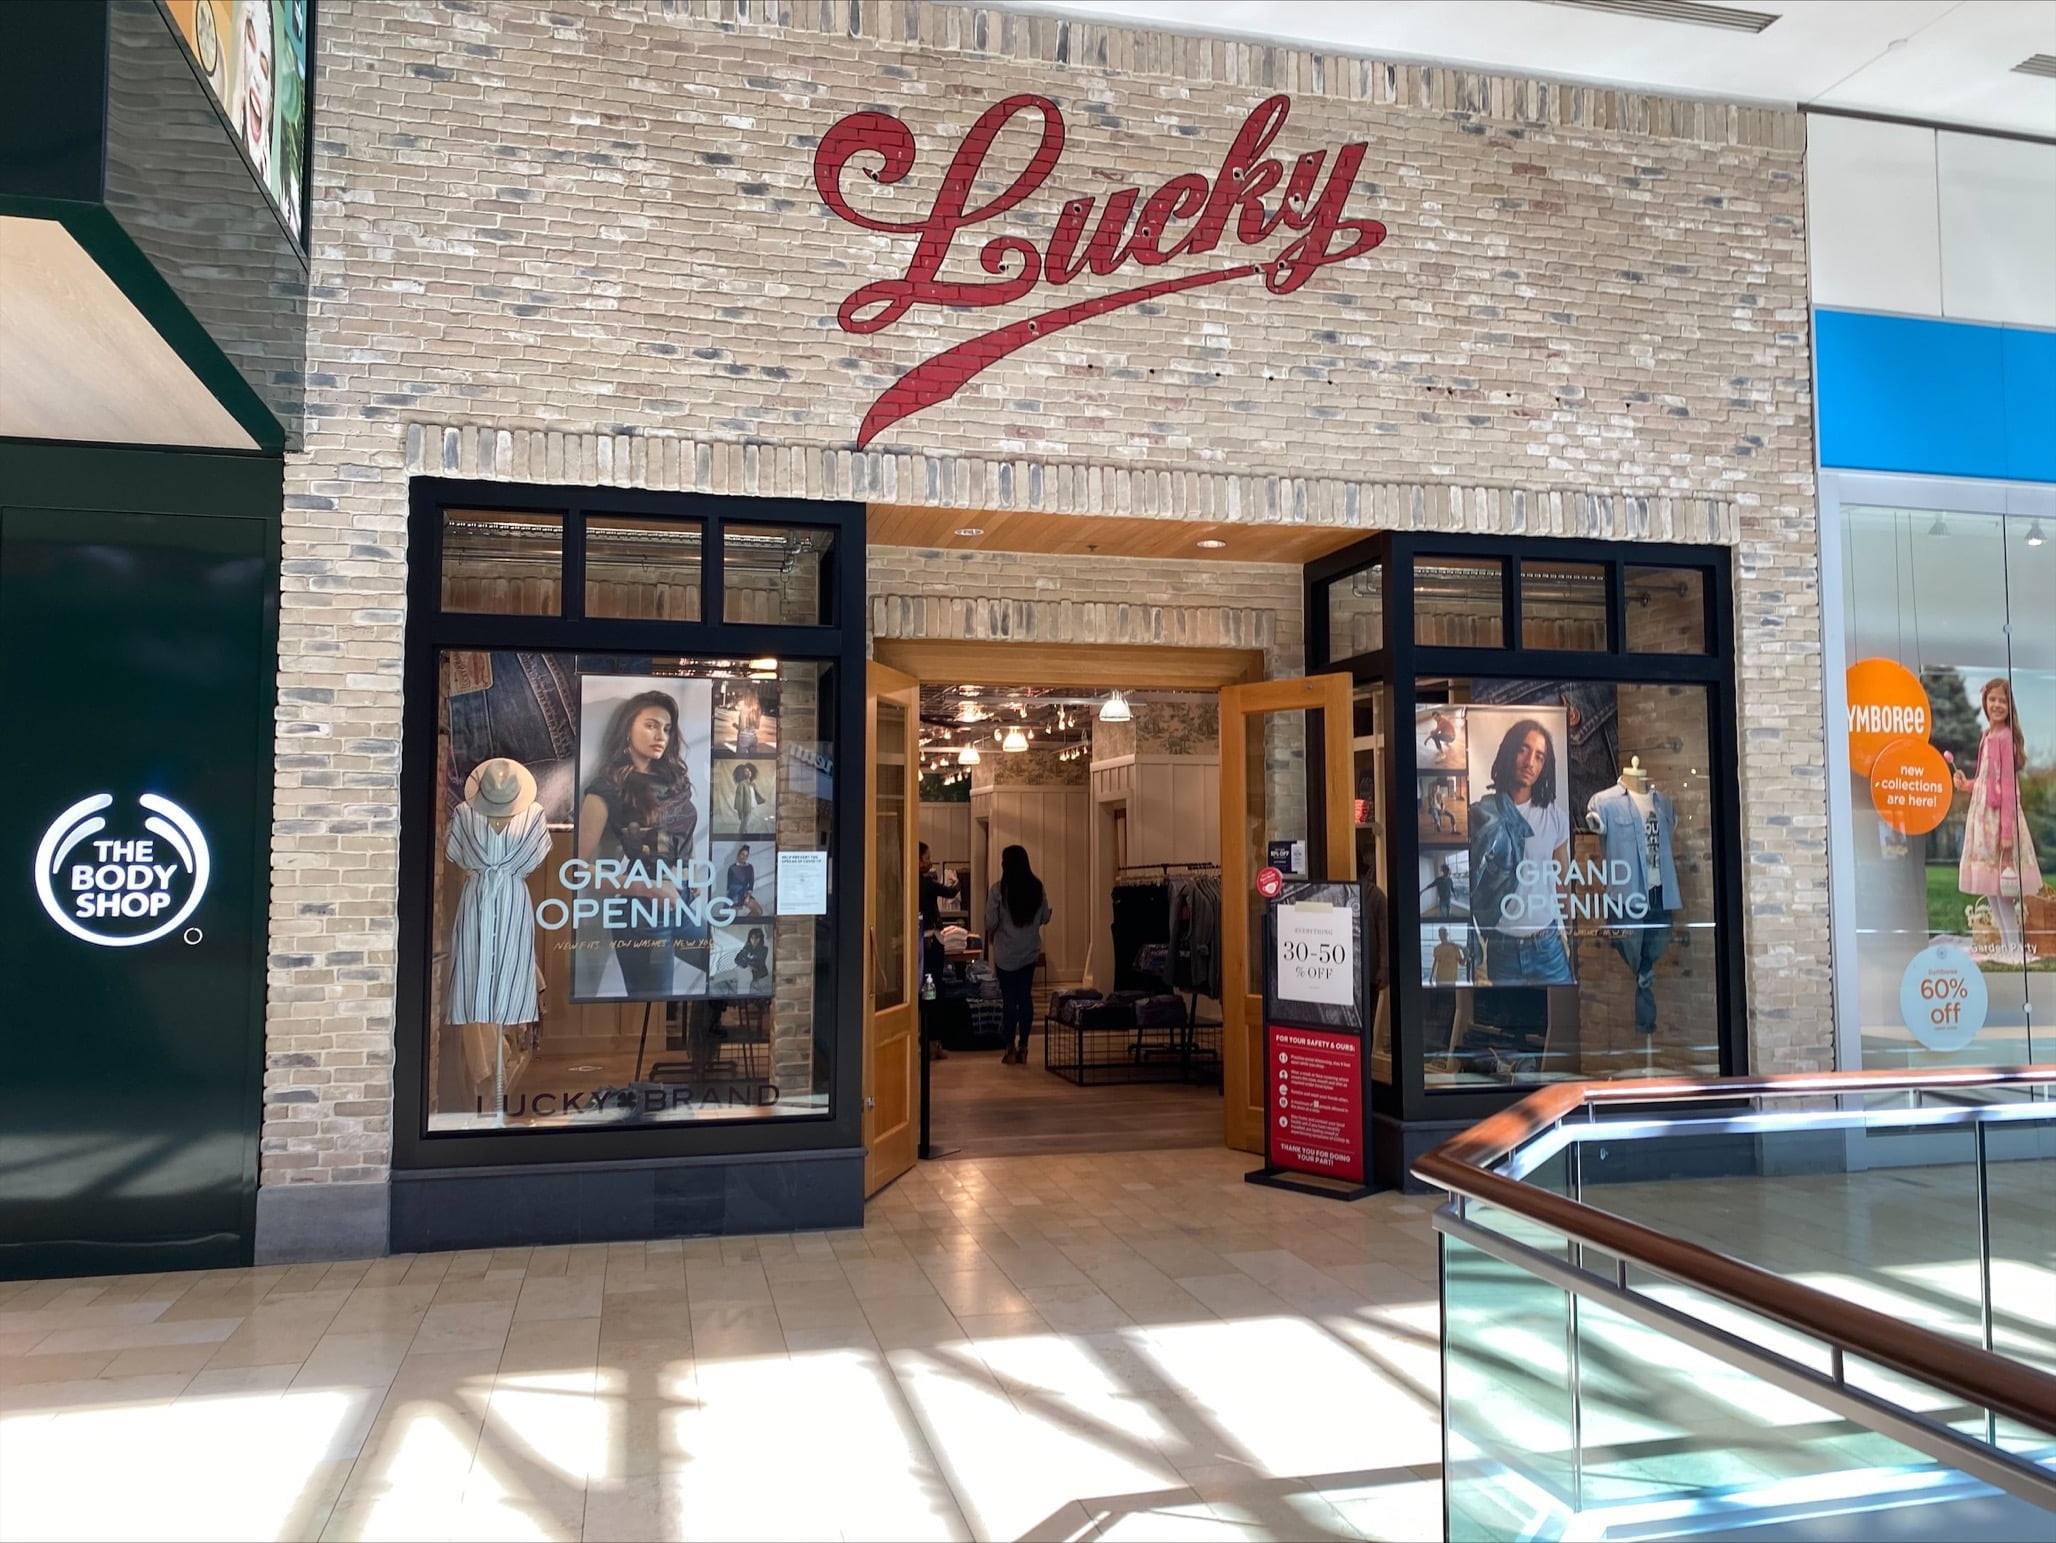 Lucky Brand — The ii Agency